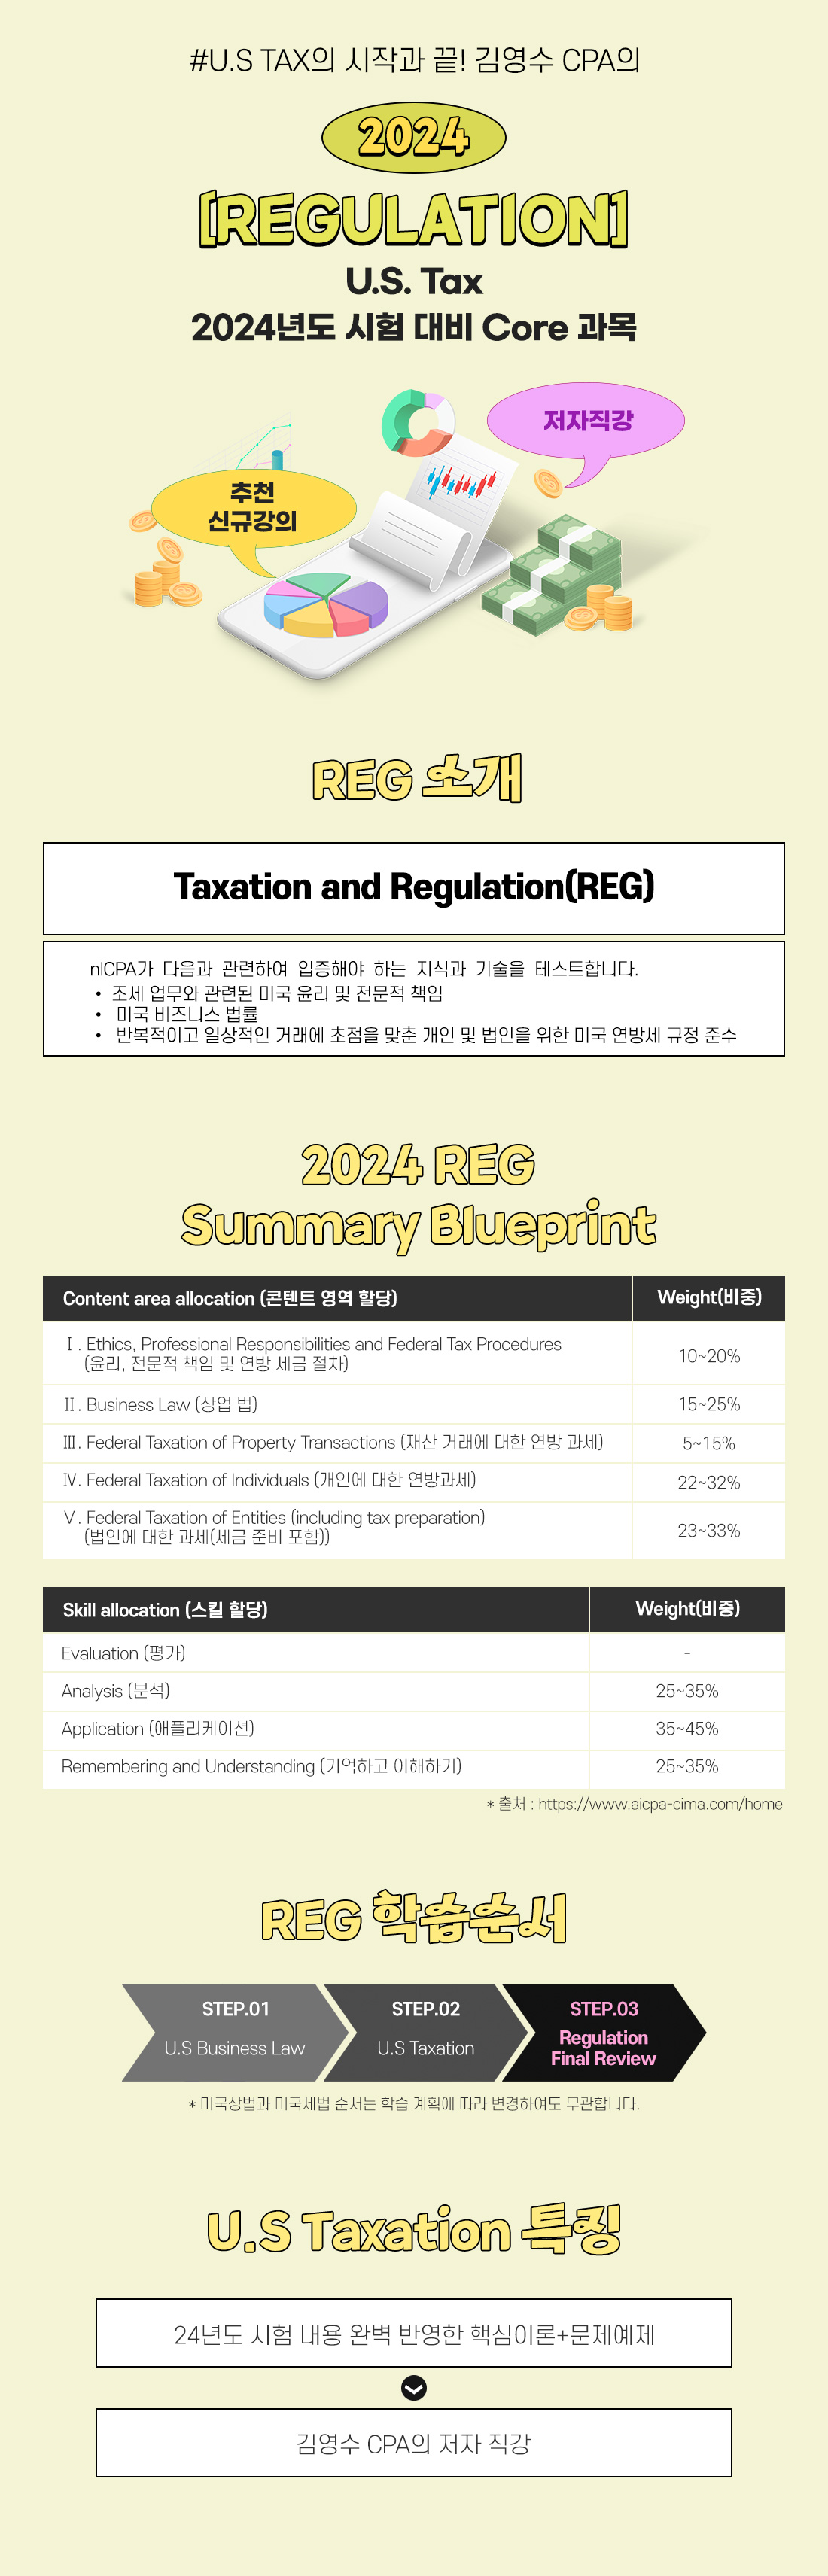 AICPA_REGULATION_U.S. Tax